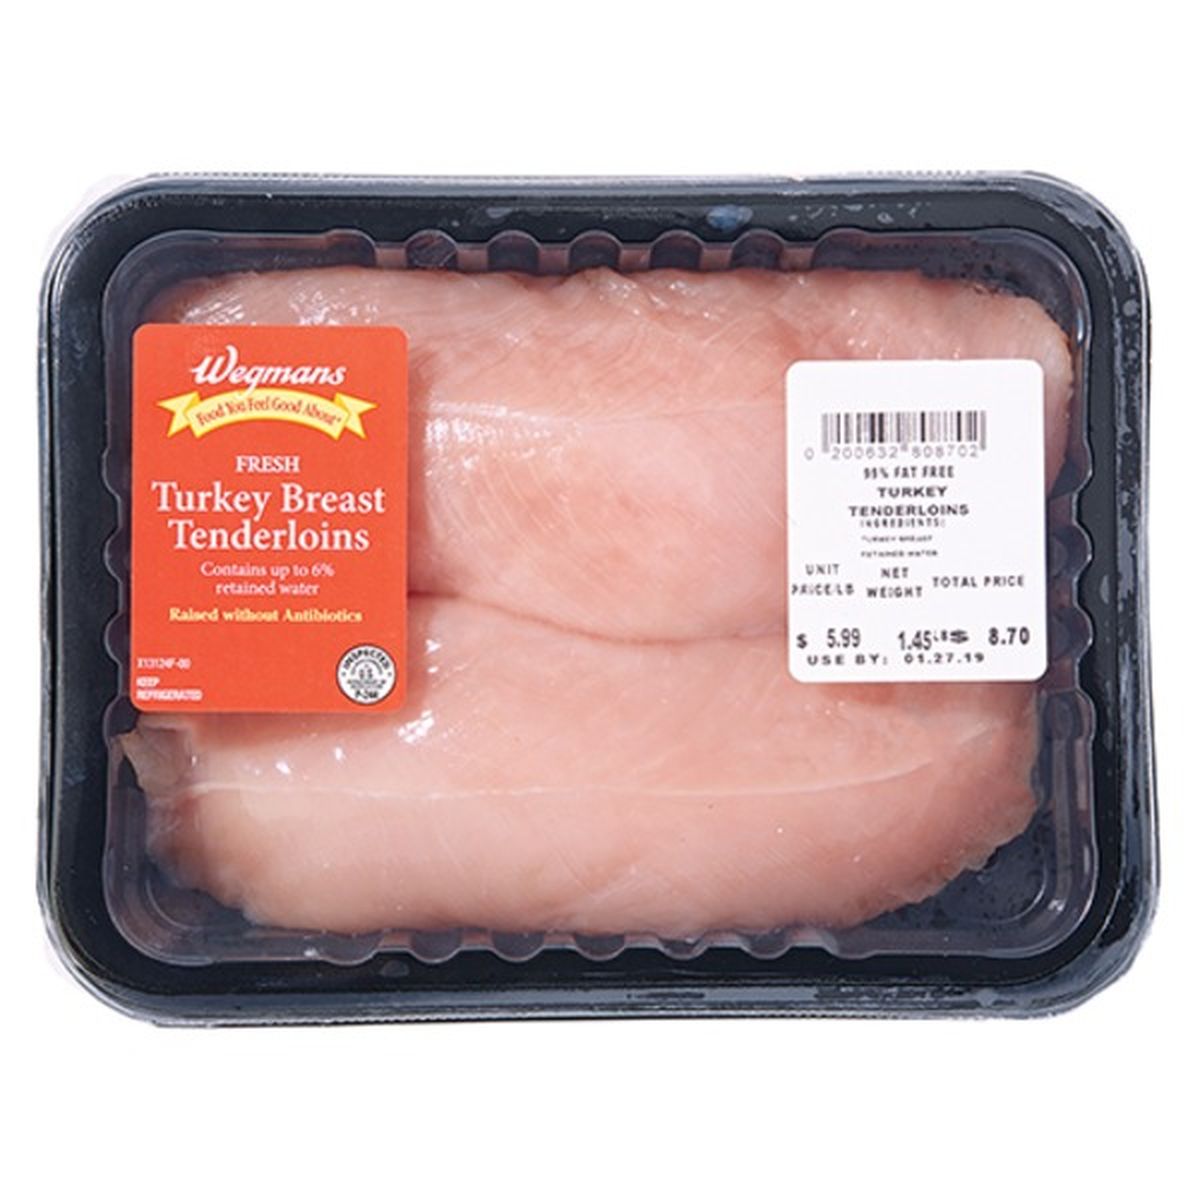 Calories in Wegmans Antibiotic Free Turkey Breast Tenderloin